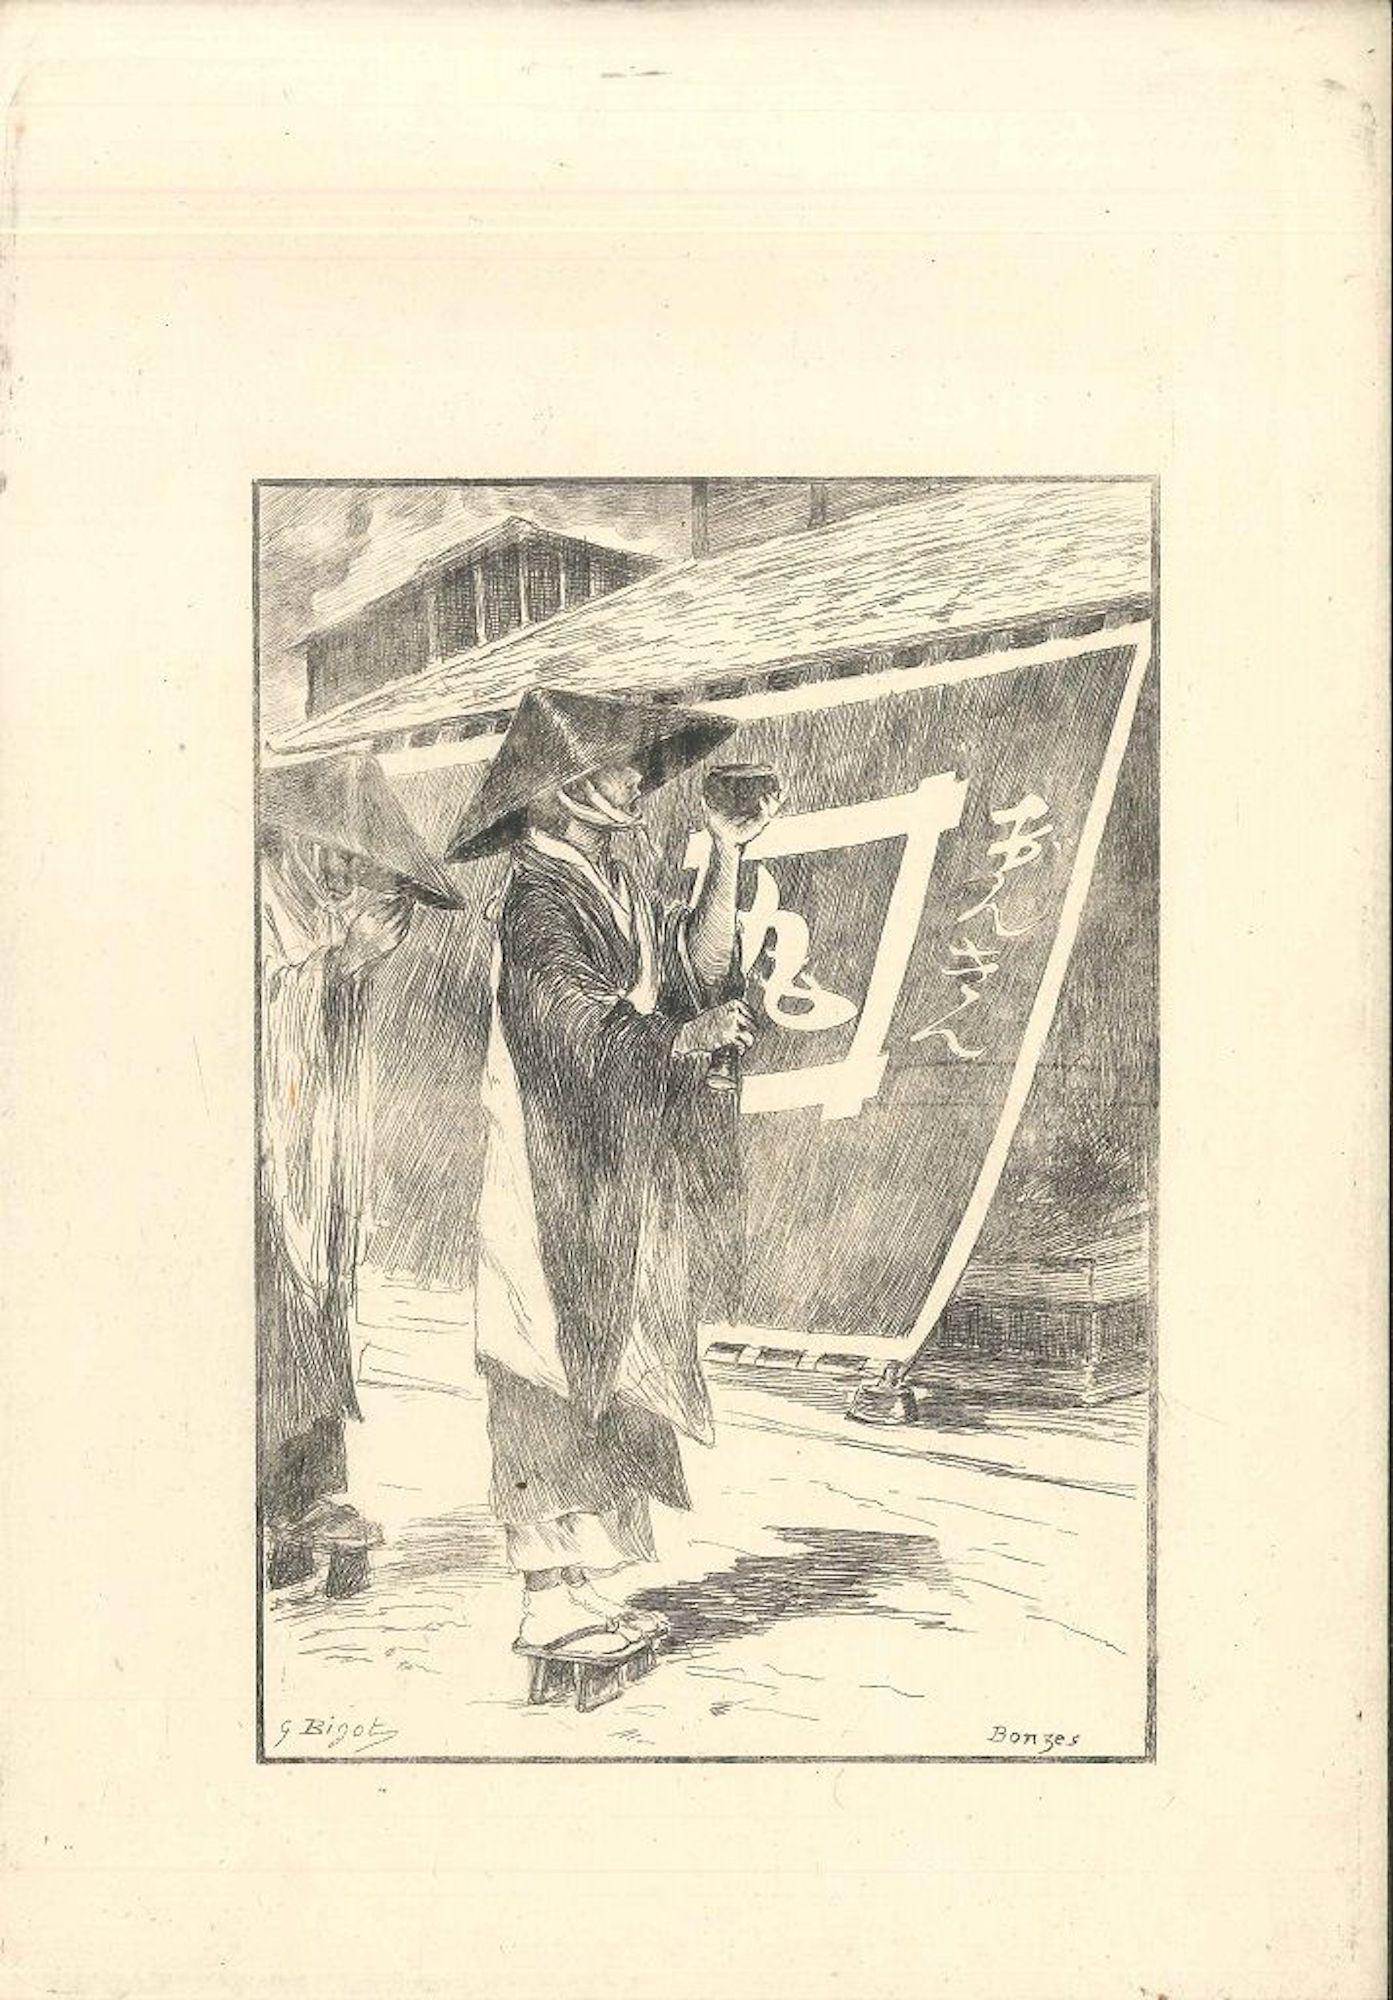 Bonzes - Etching on Japan Paper by G. F. Bigot - Tokyo 1886